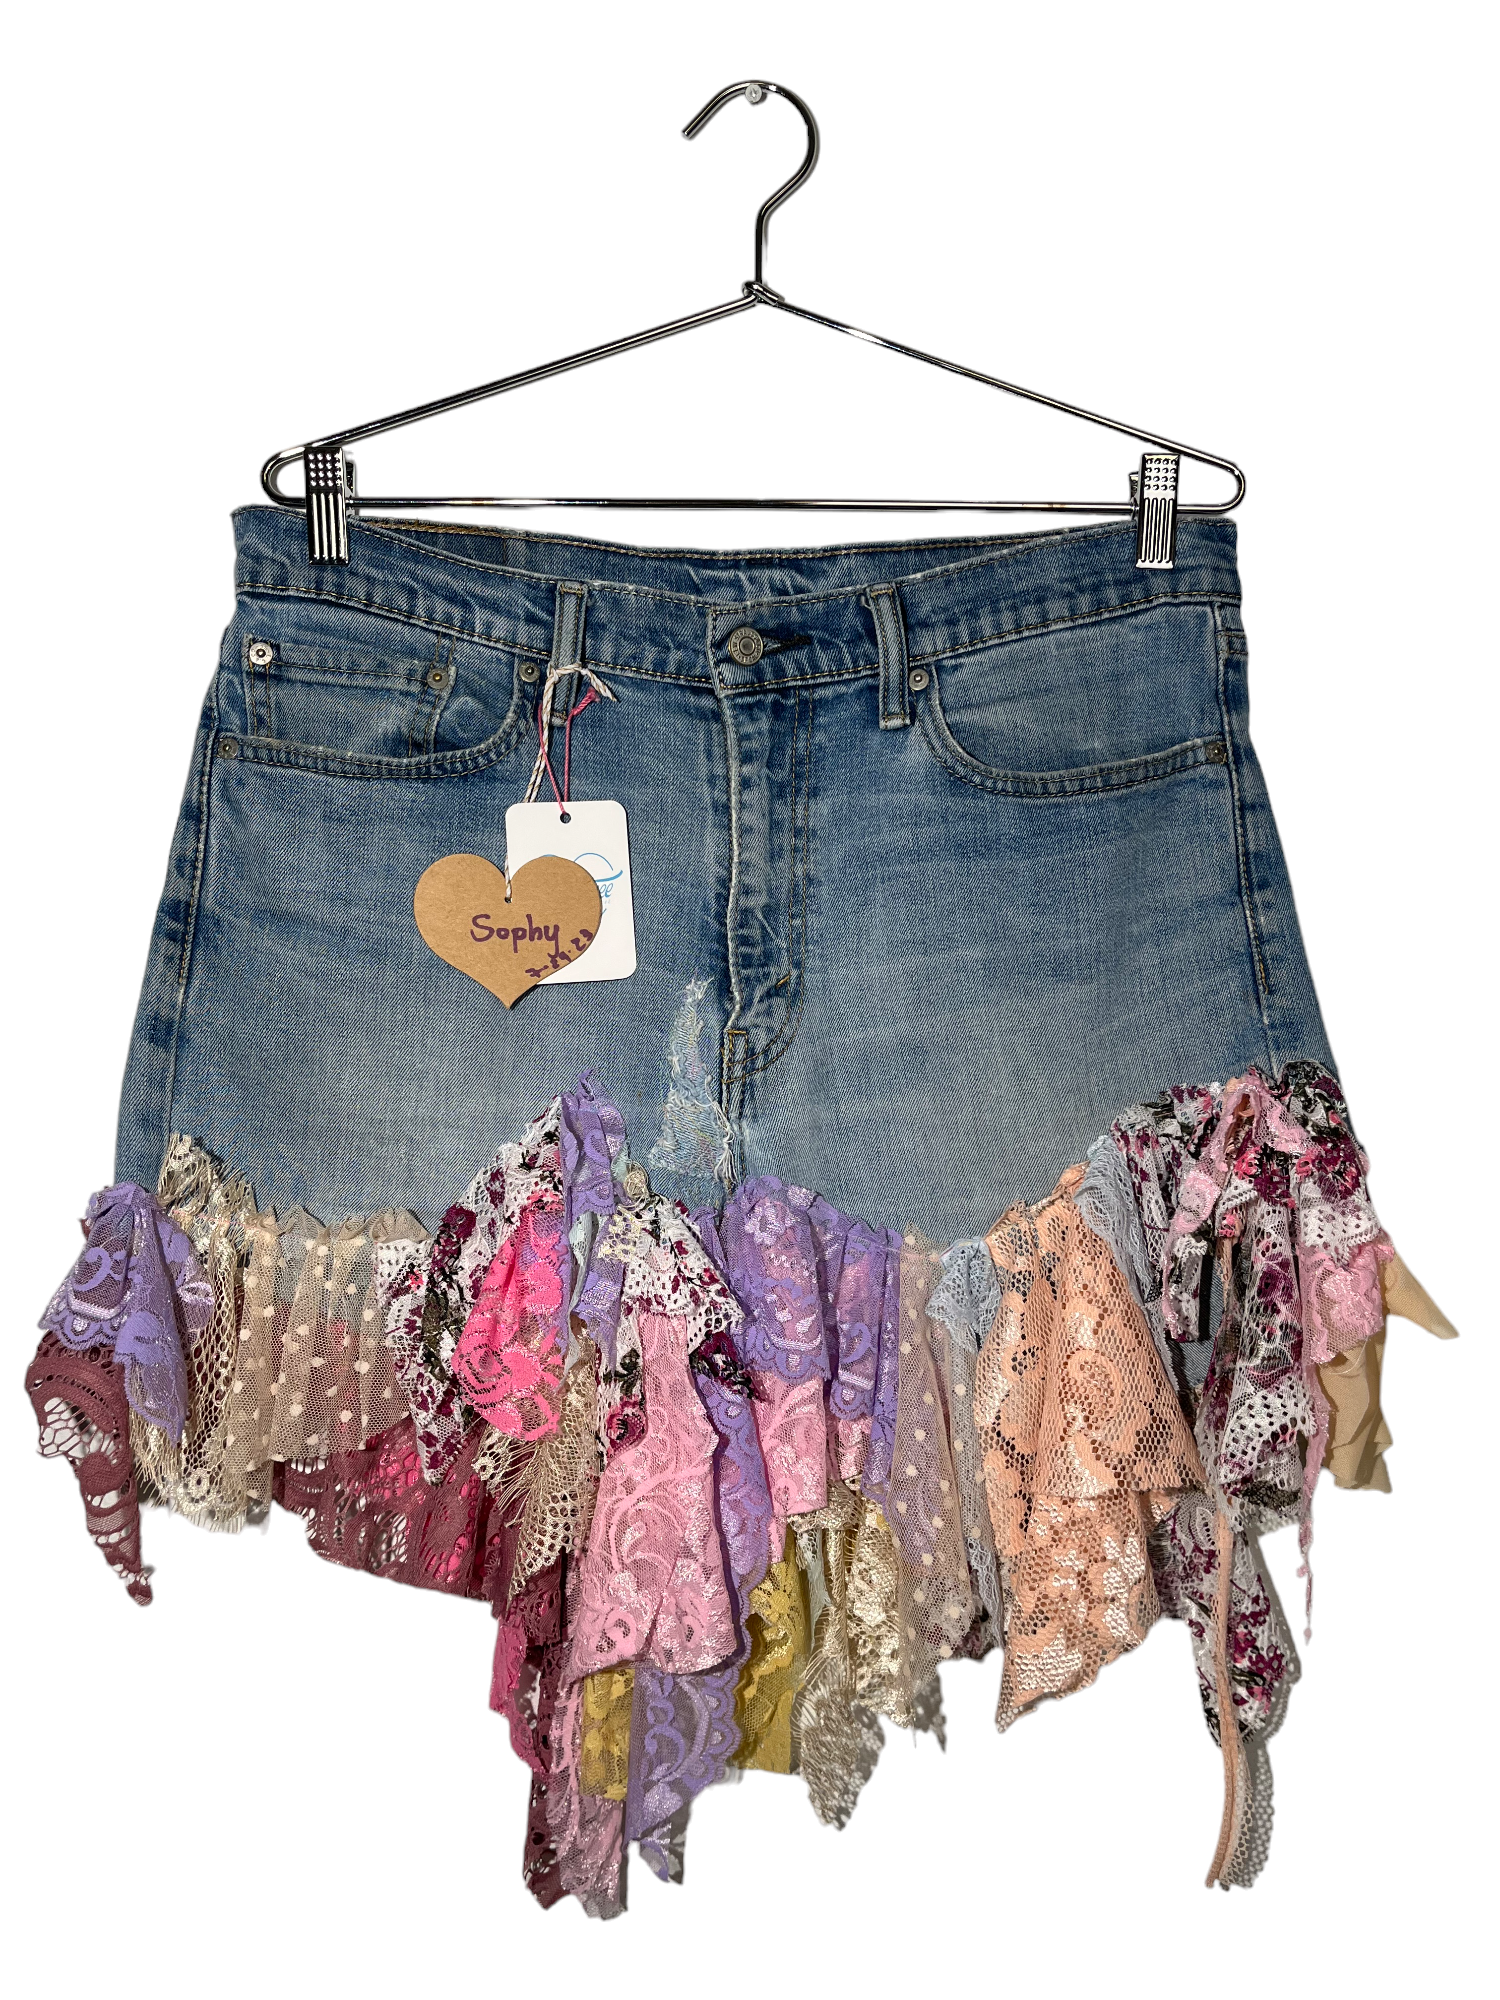 By Mechi's "Sophy" Denim Skirt Embellished Scrap Fabrics